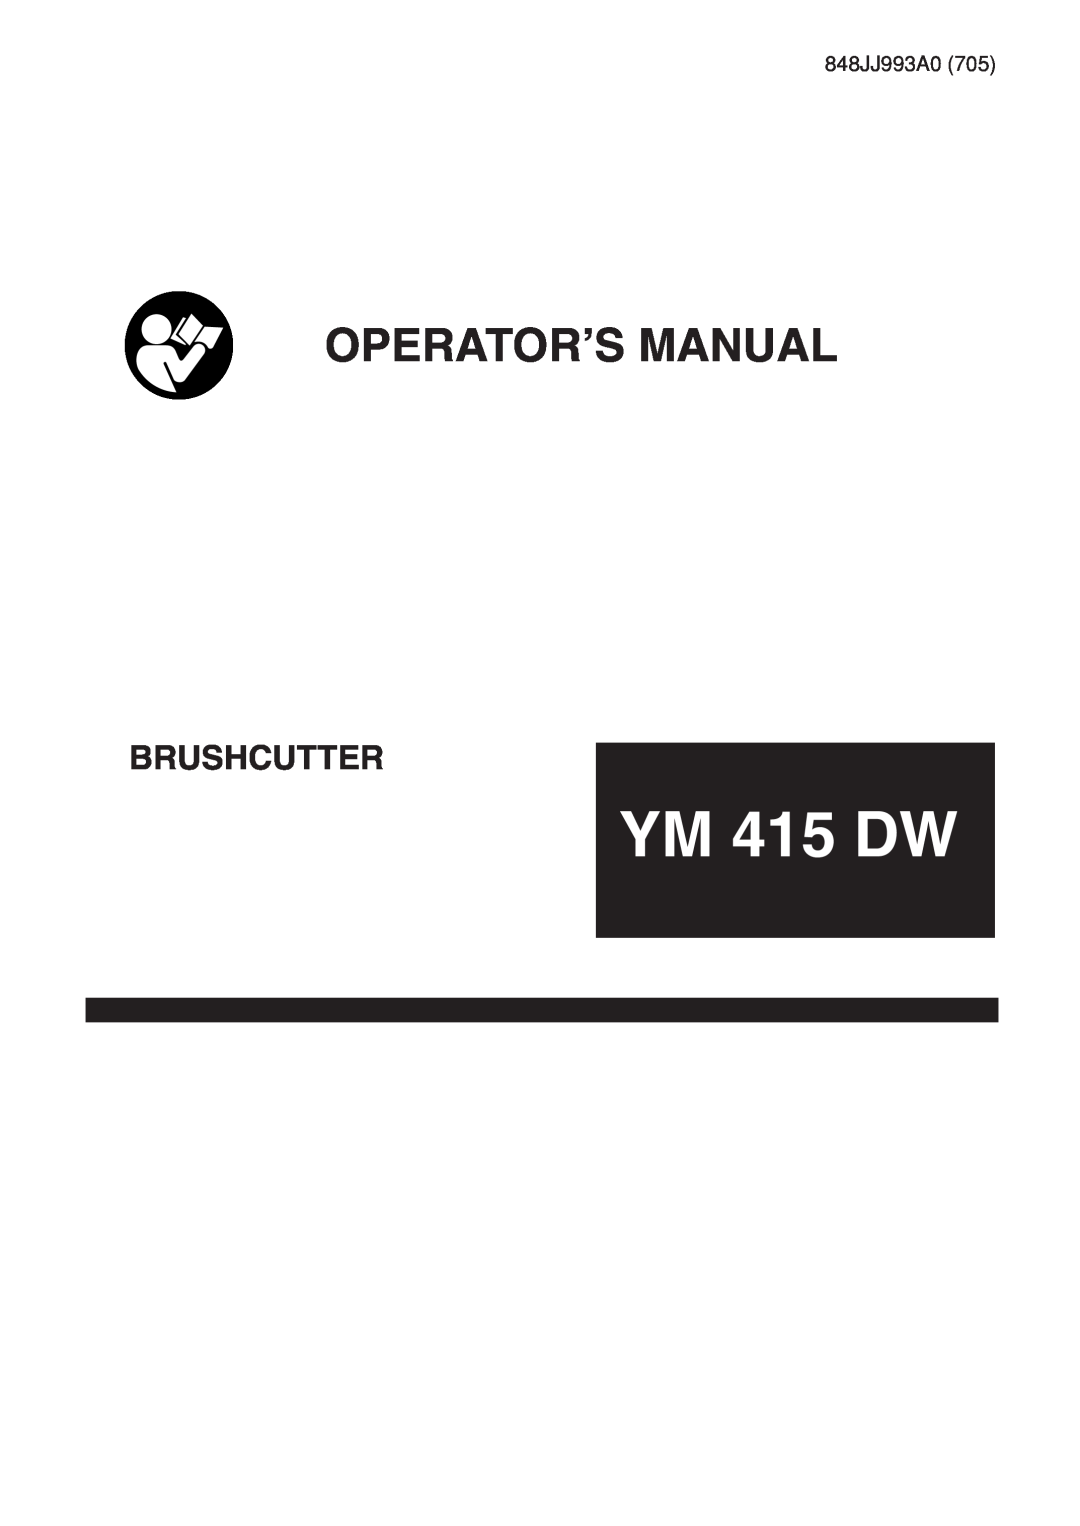 Zenoah YM 415 DW manual Operator’S Manual, Brushcutter, 848JJ993A0 